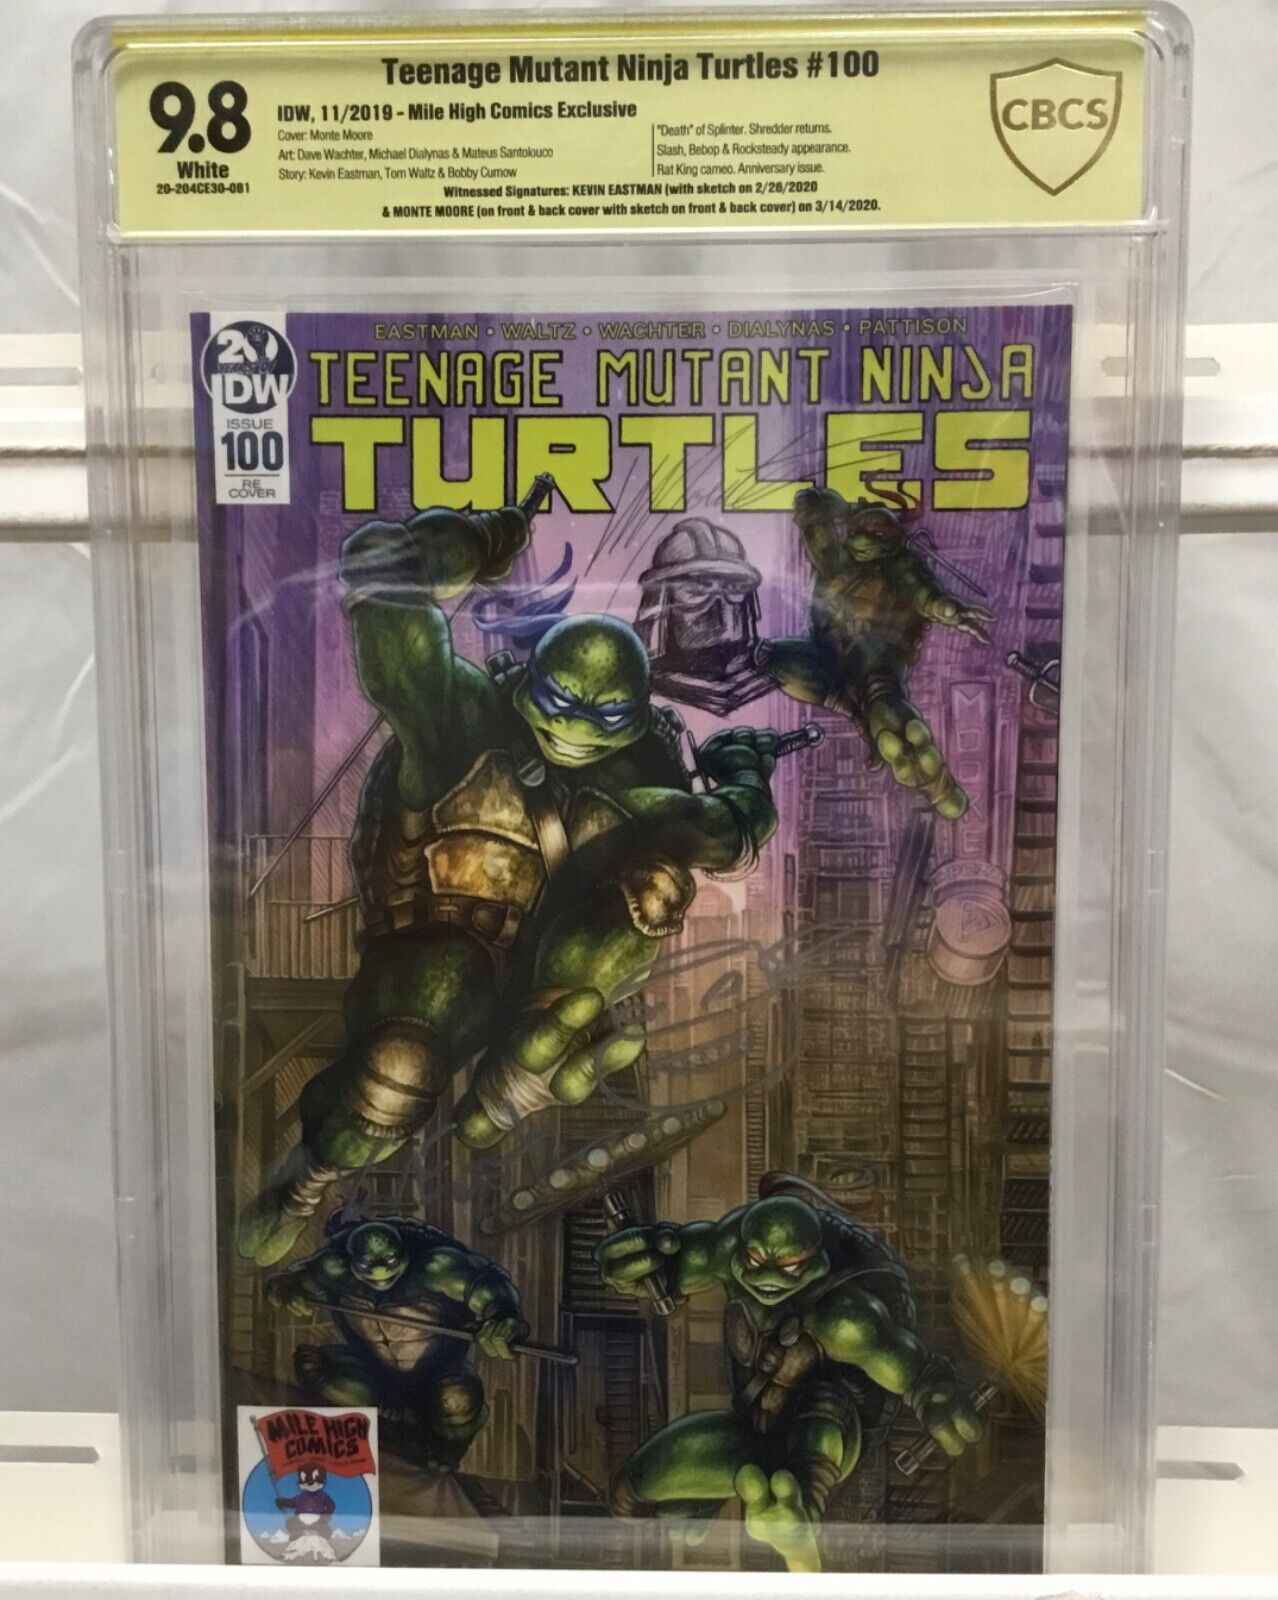 Teenage Mutant Ninja Turtles #100 CBCS 9.8 SIGNED AND ORIGINAL SKETCH